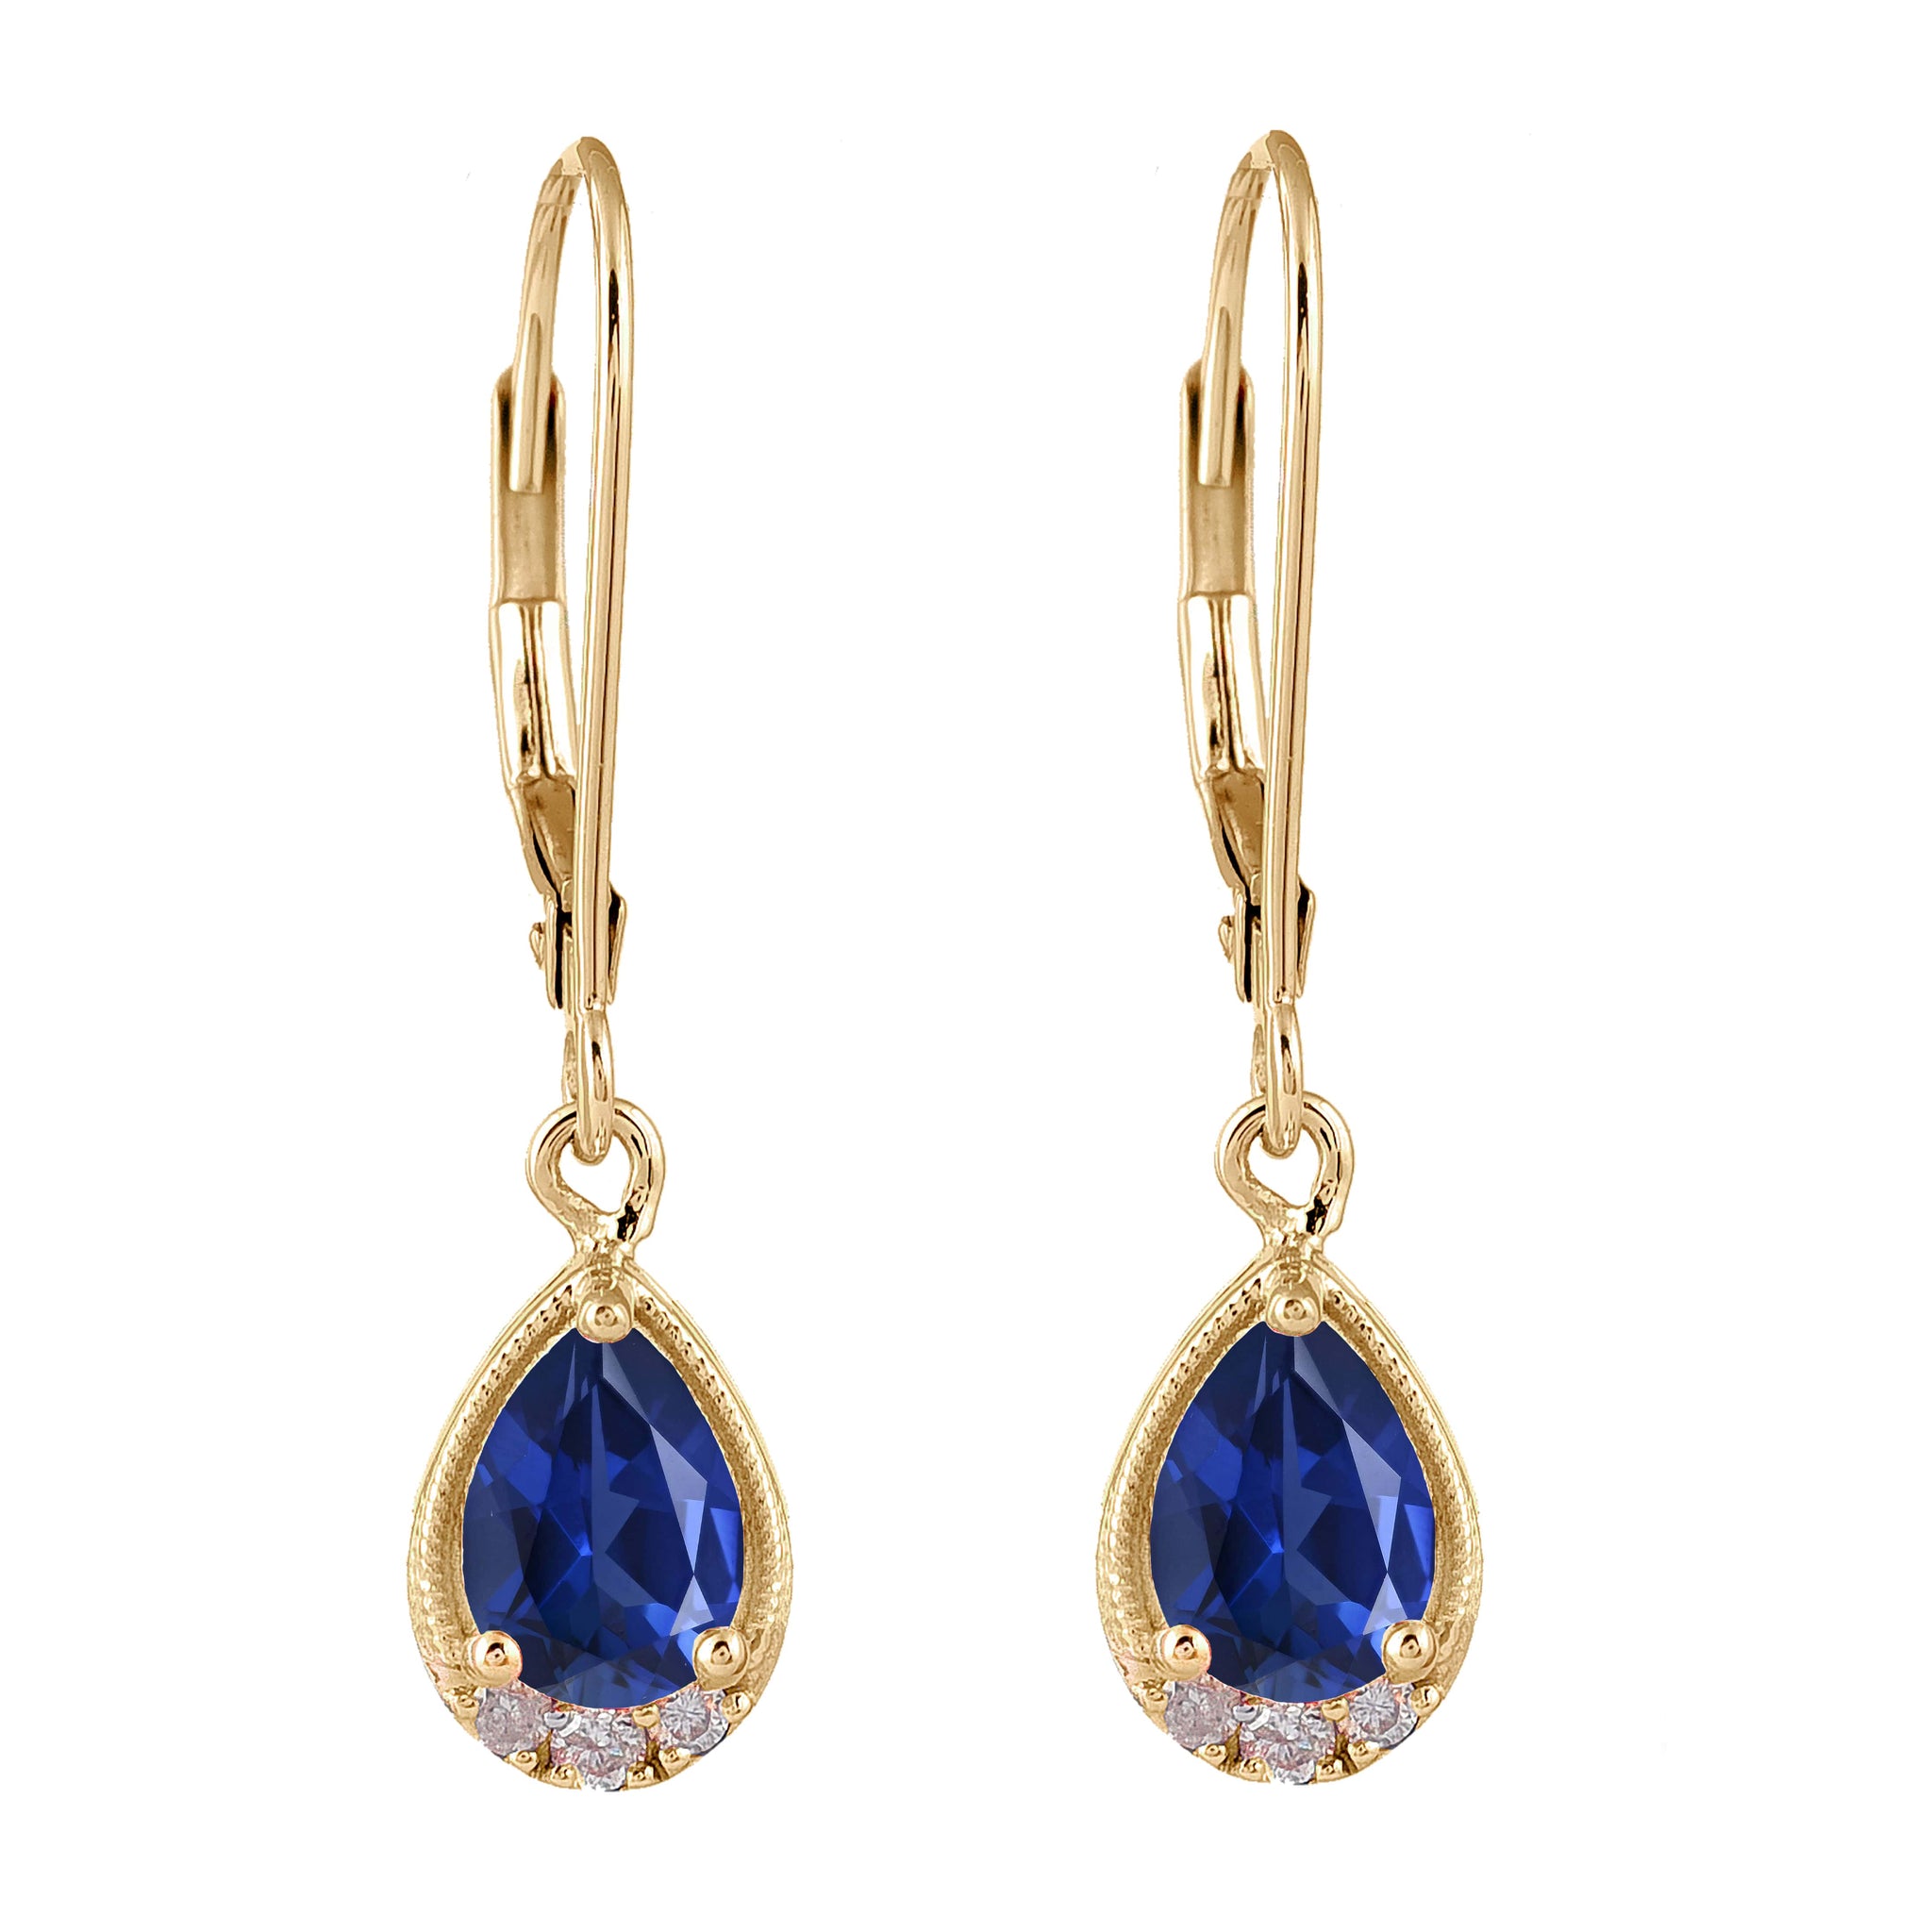 Stunning blue sapphire earrings